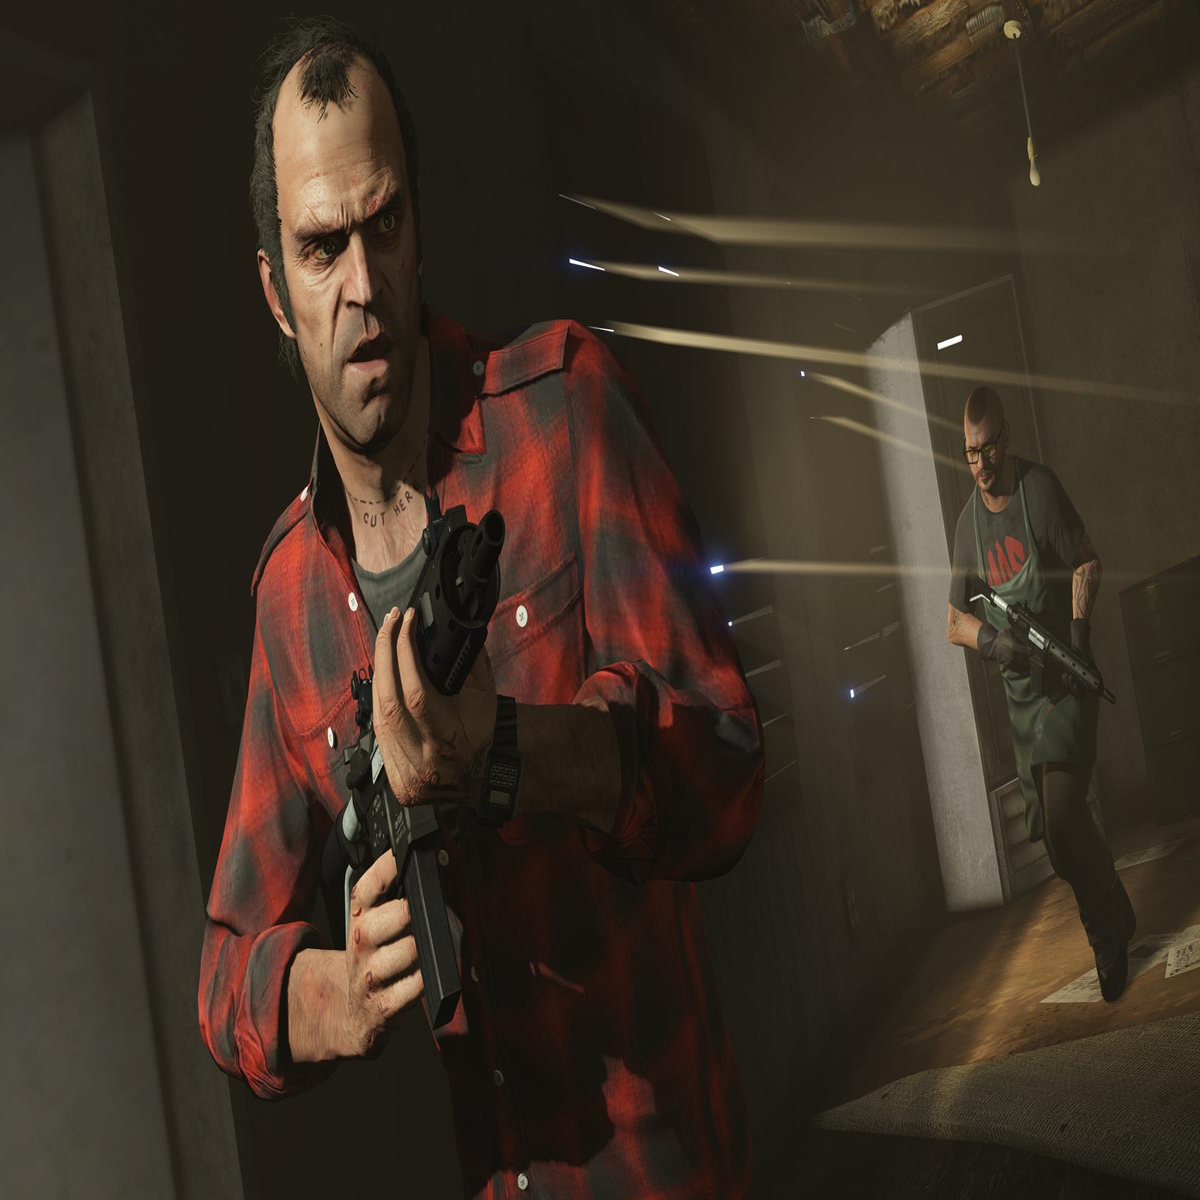 GTA 5 mod has you abandon the criminal life for a regular job